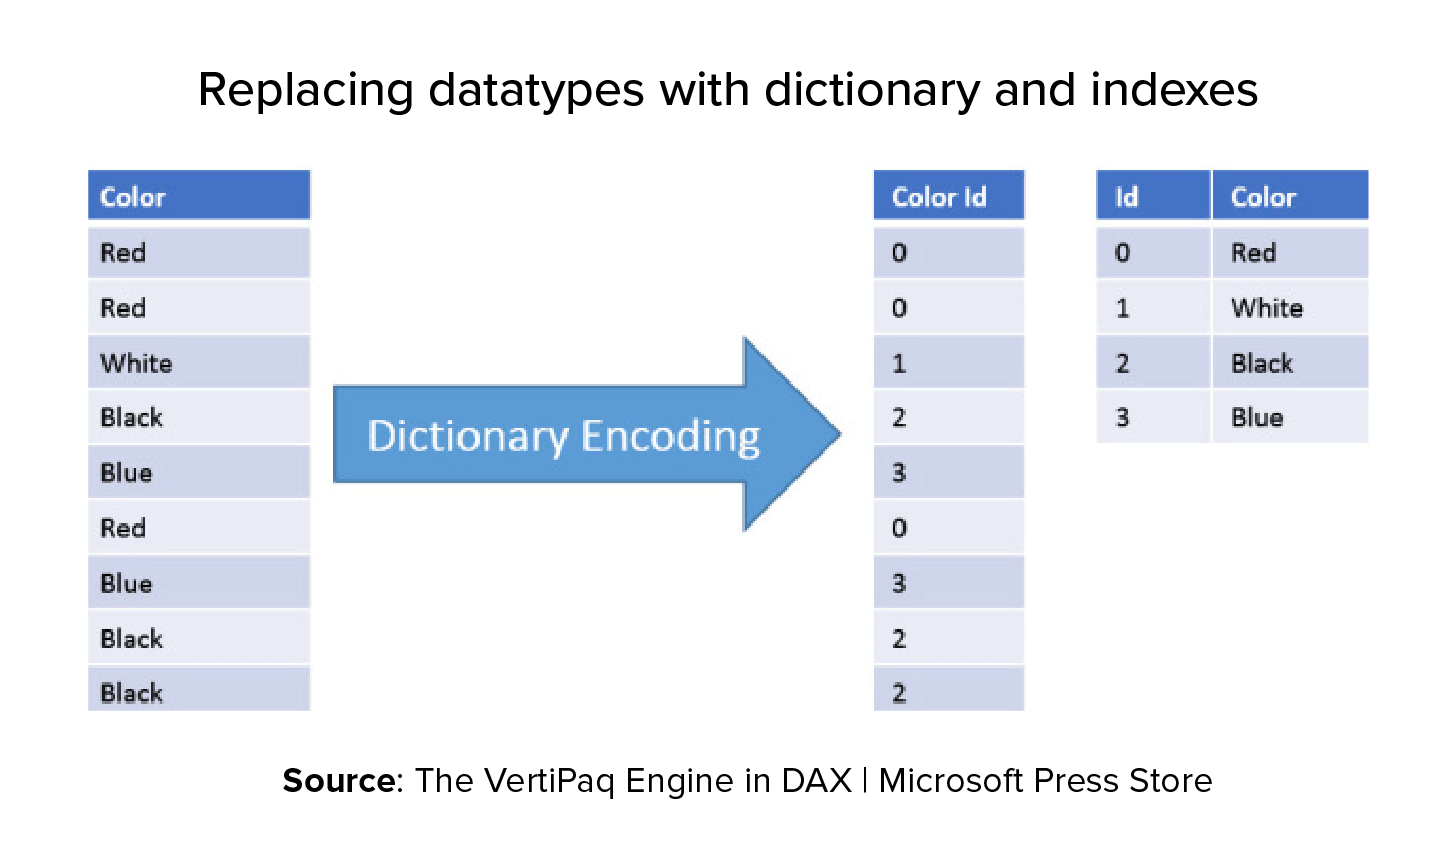 Dictonary Encoding